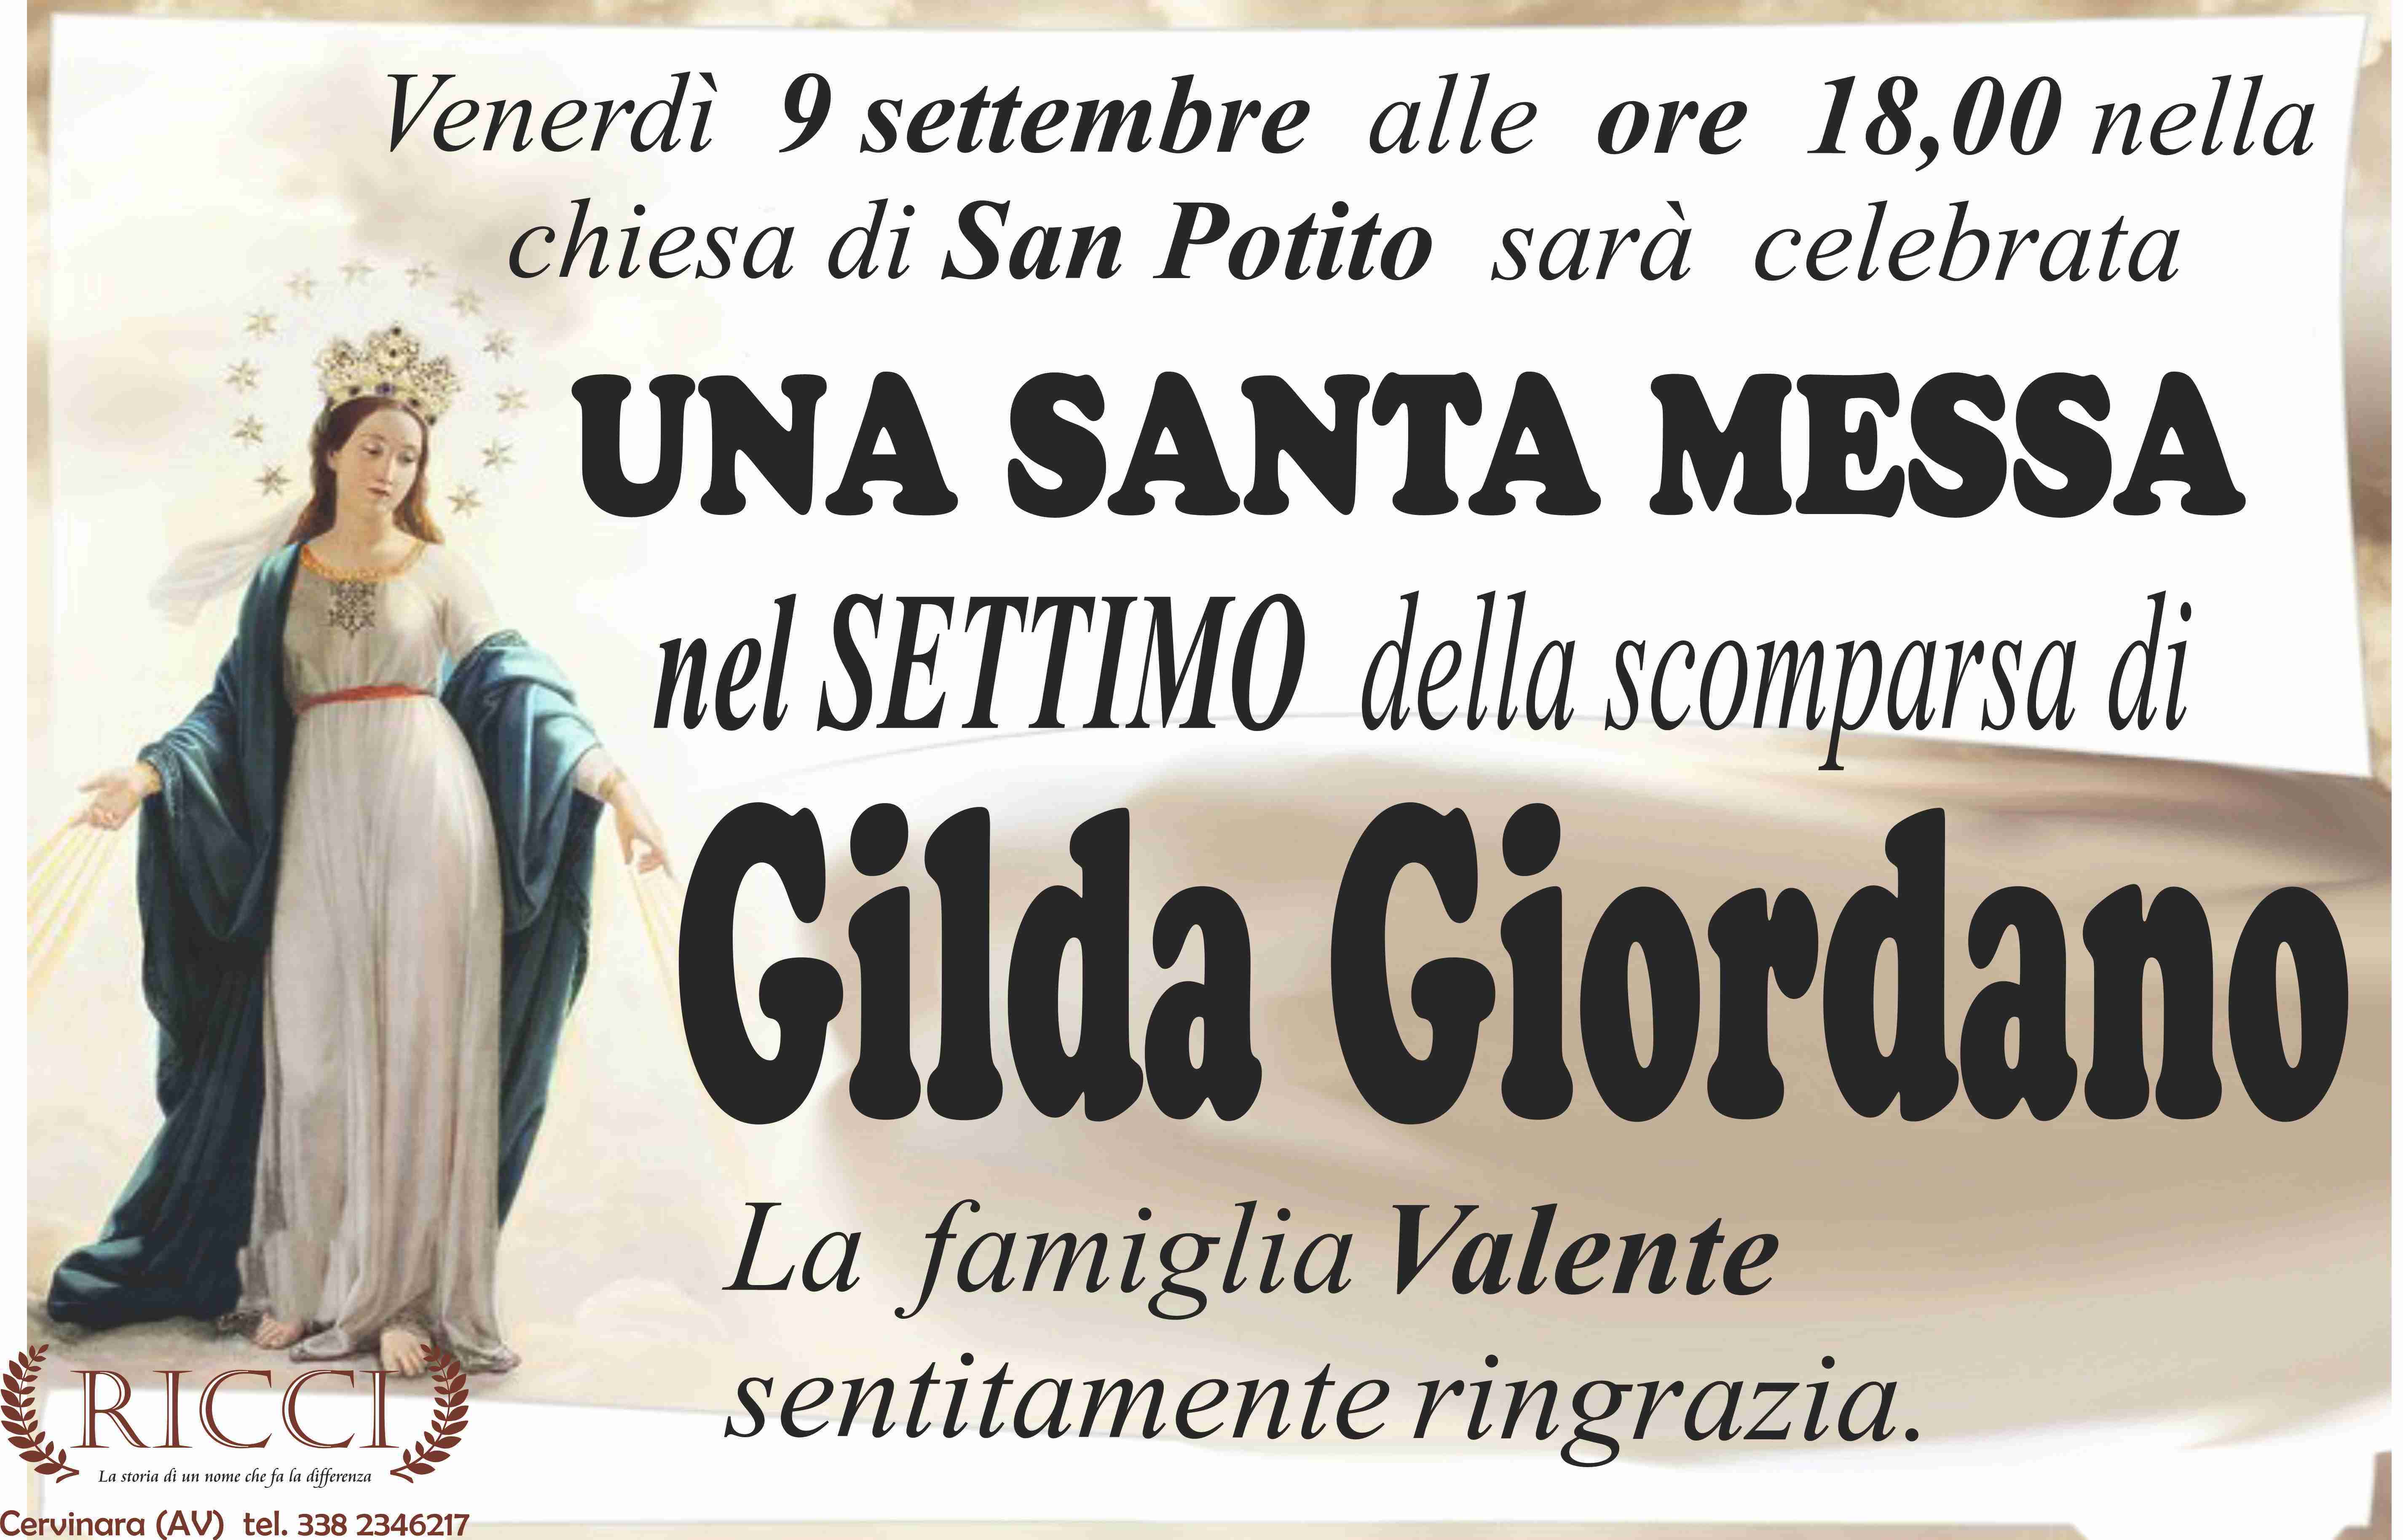 Gilda Giordano